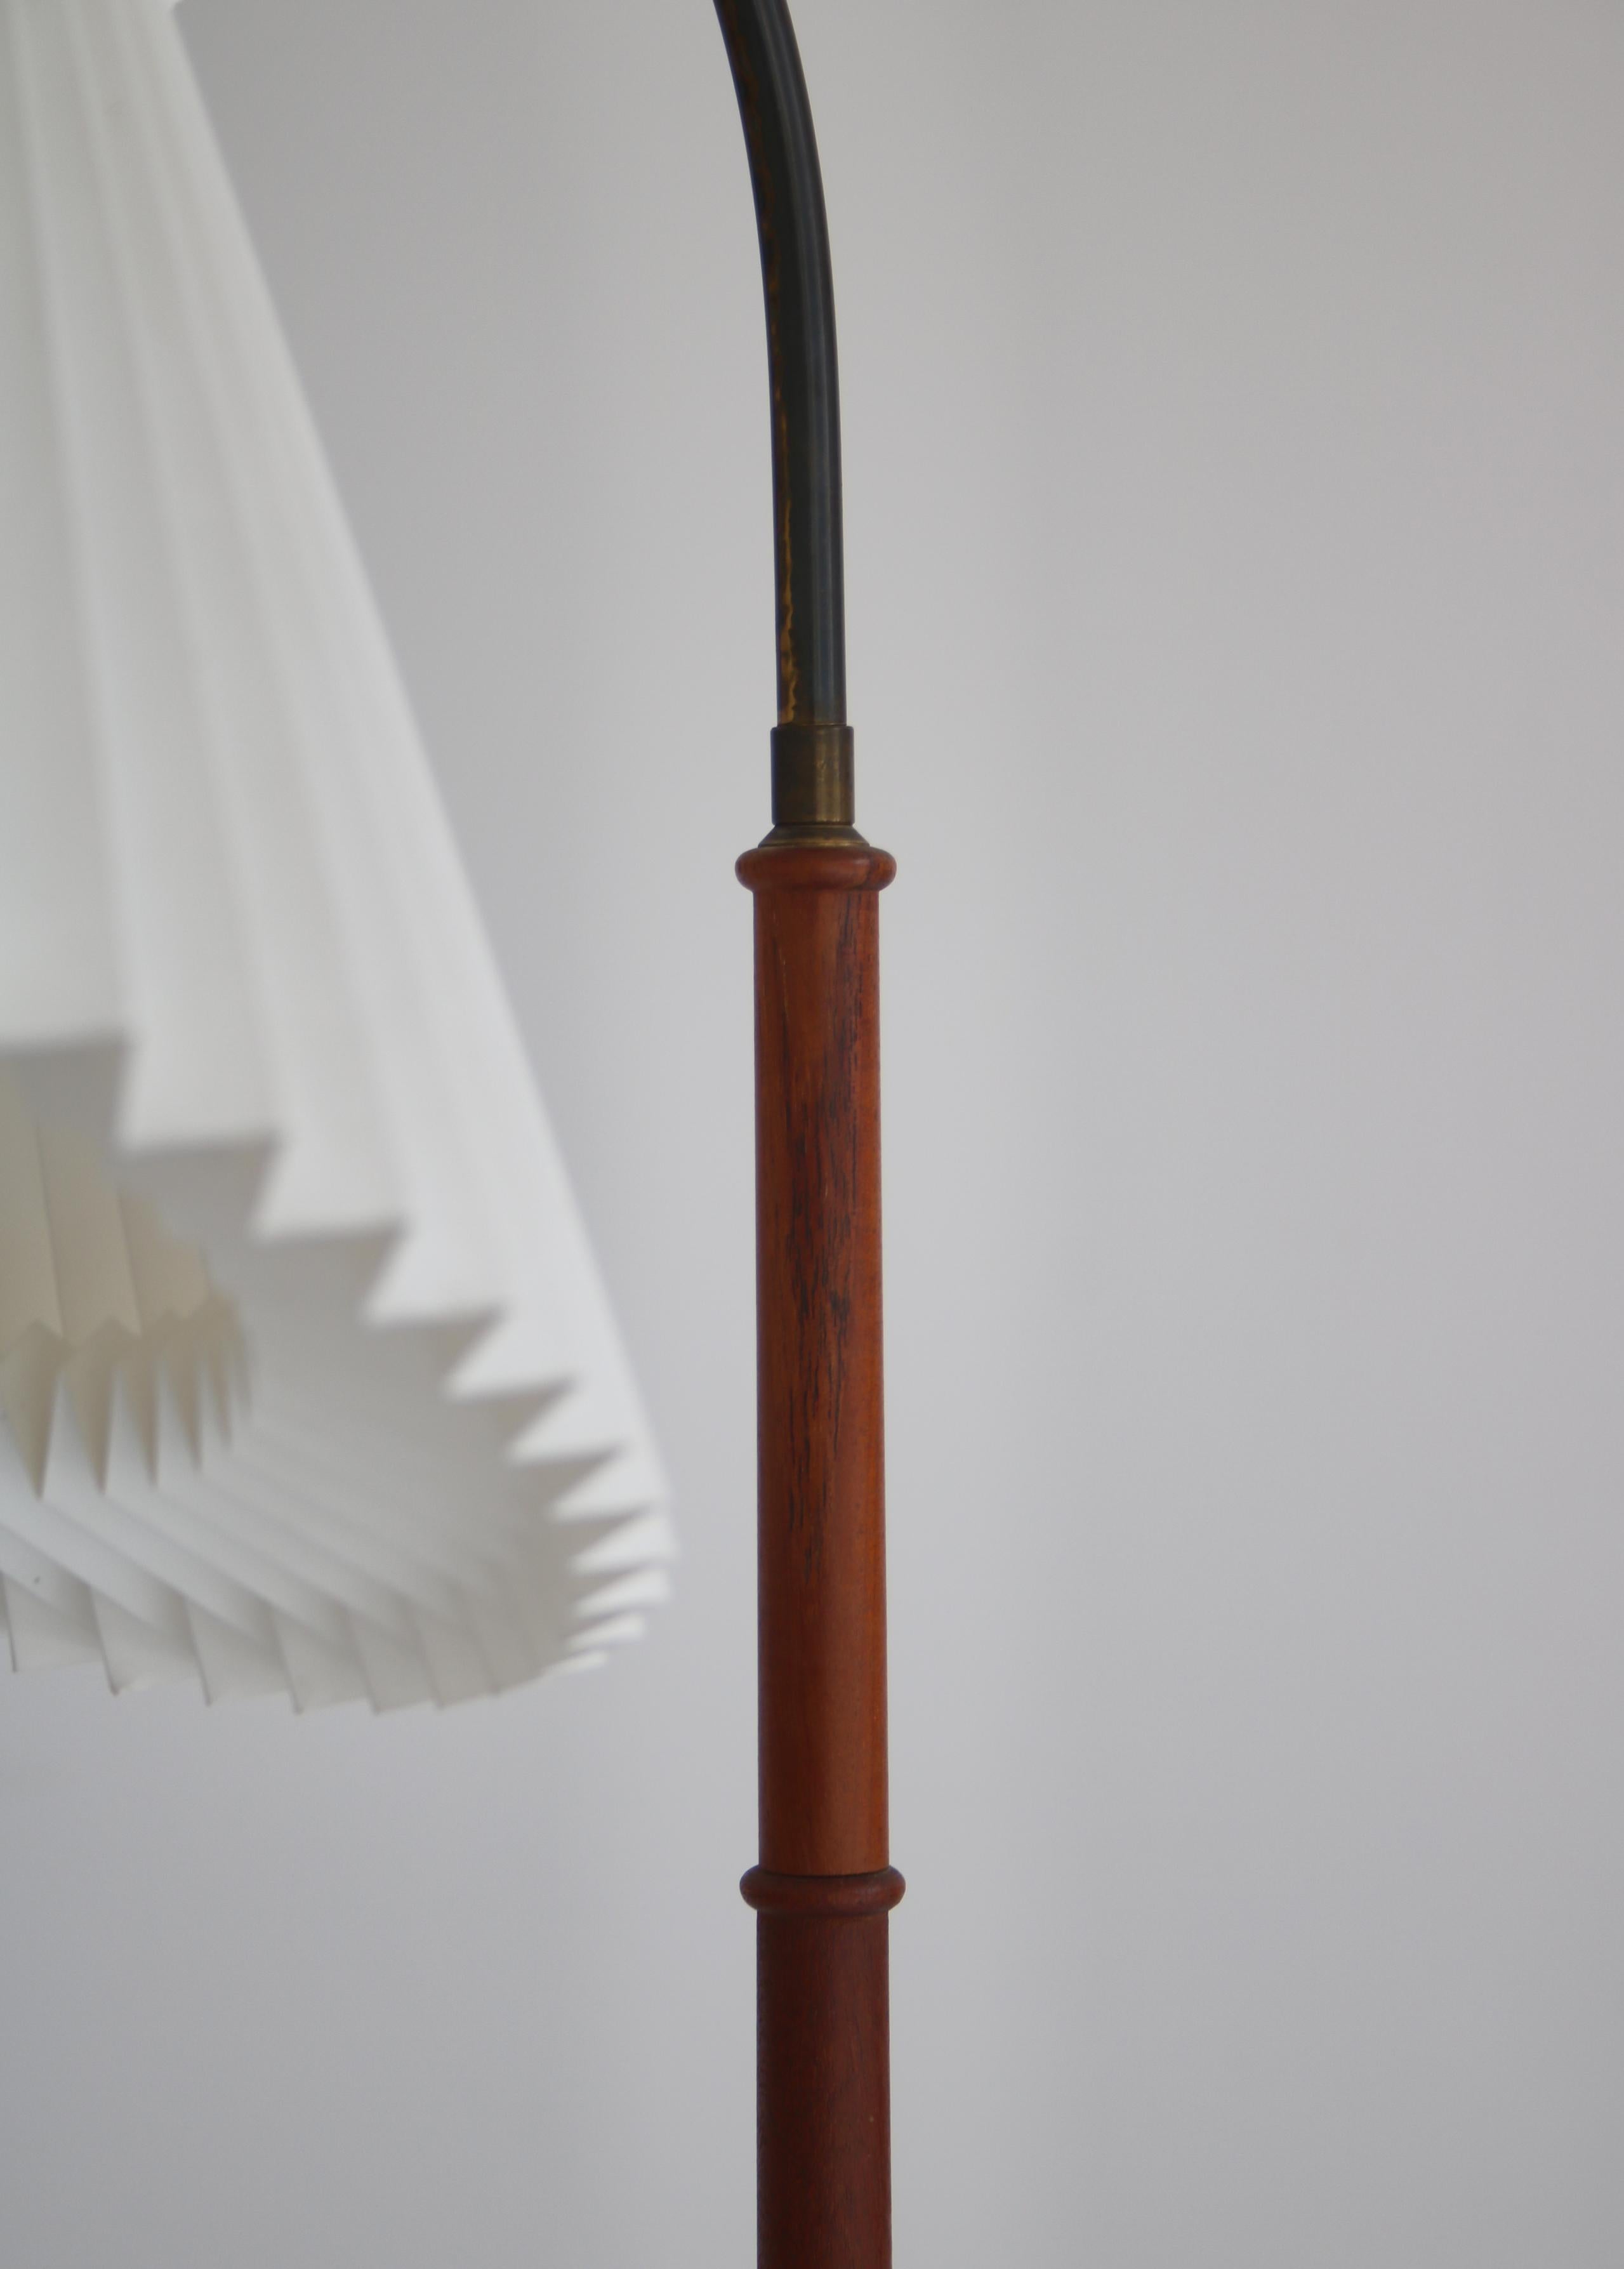 Danish Modern Floor Lamp in Teak with Hand Folded Le Klint Shade, 1950s For Sale 2